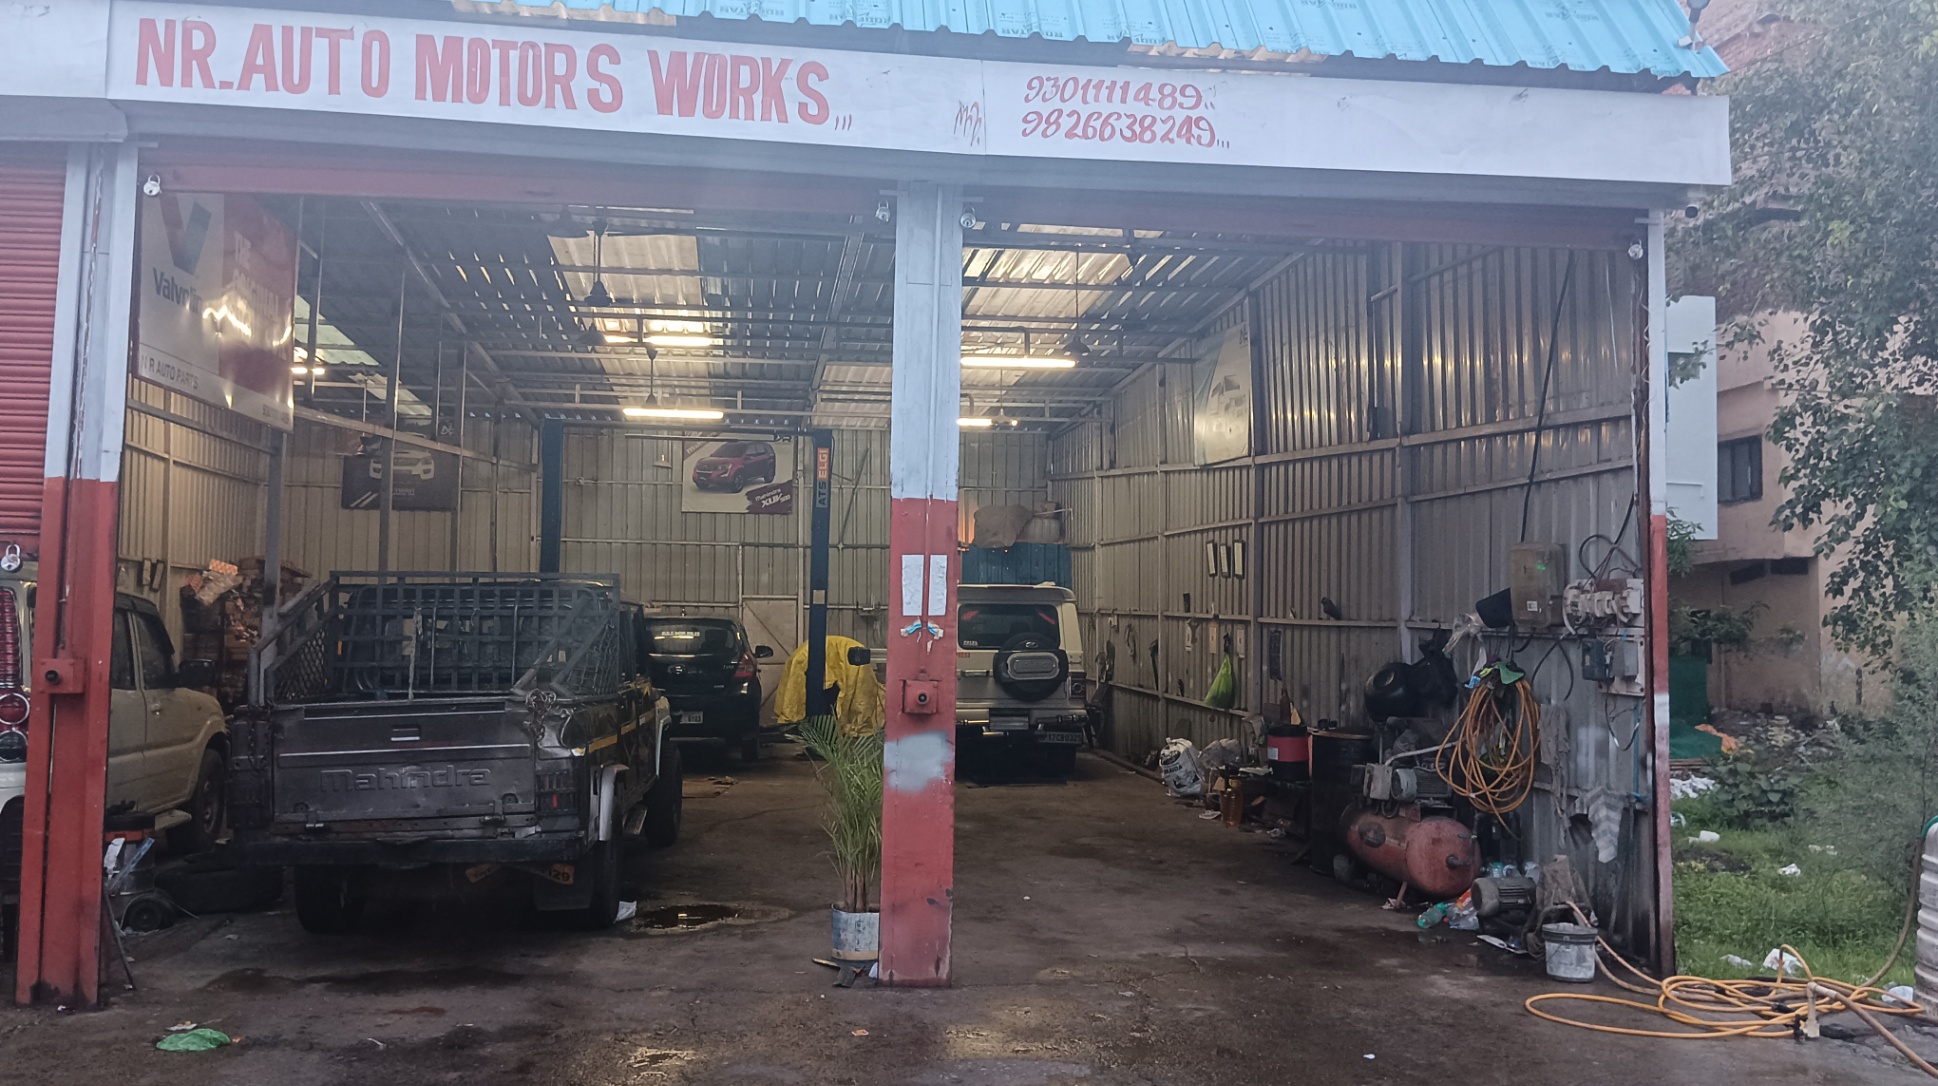 NR Auto Motor Works